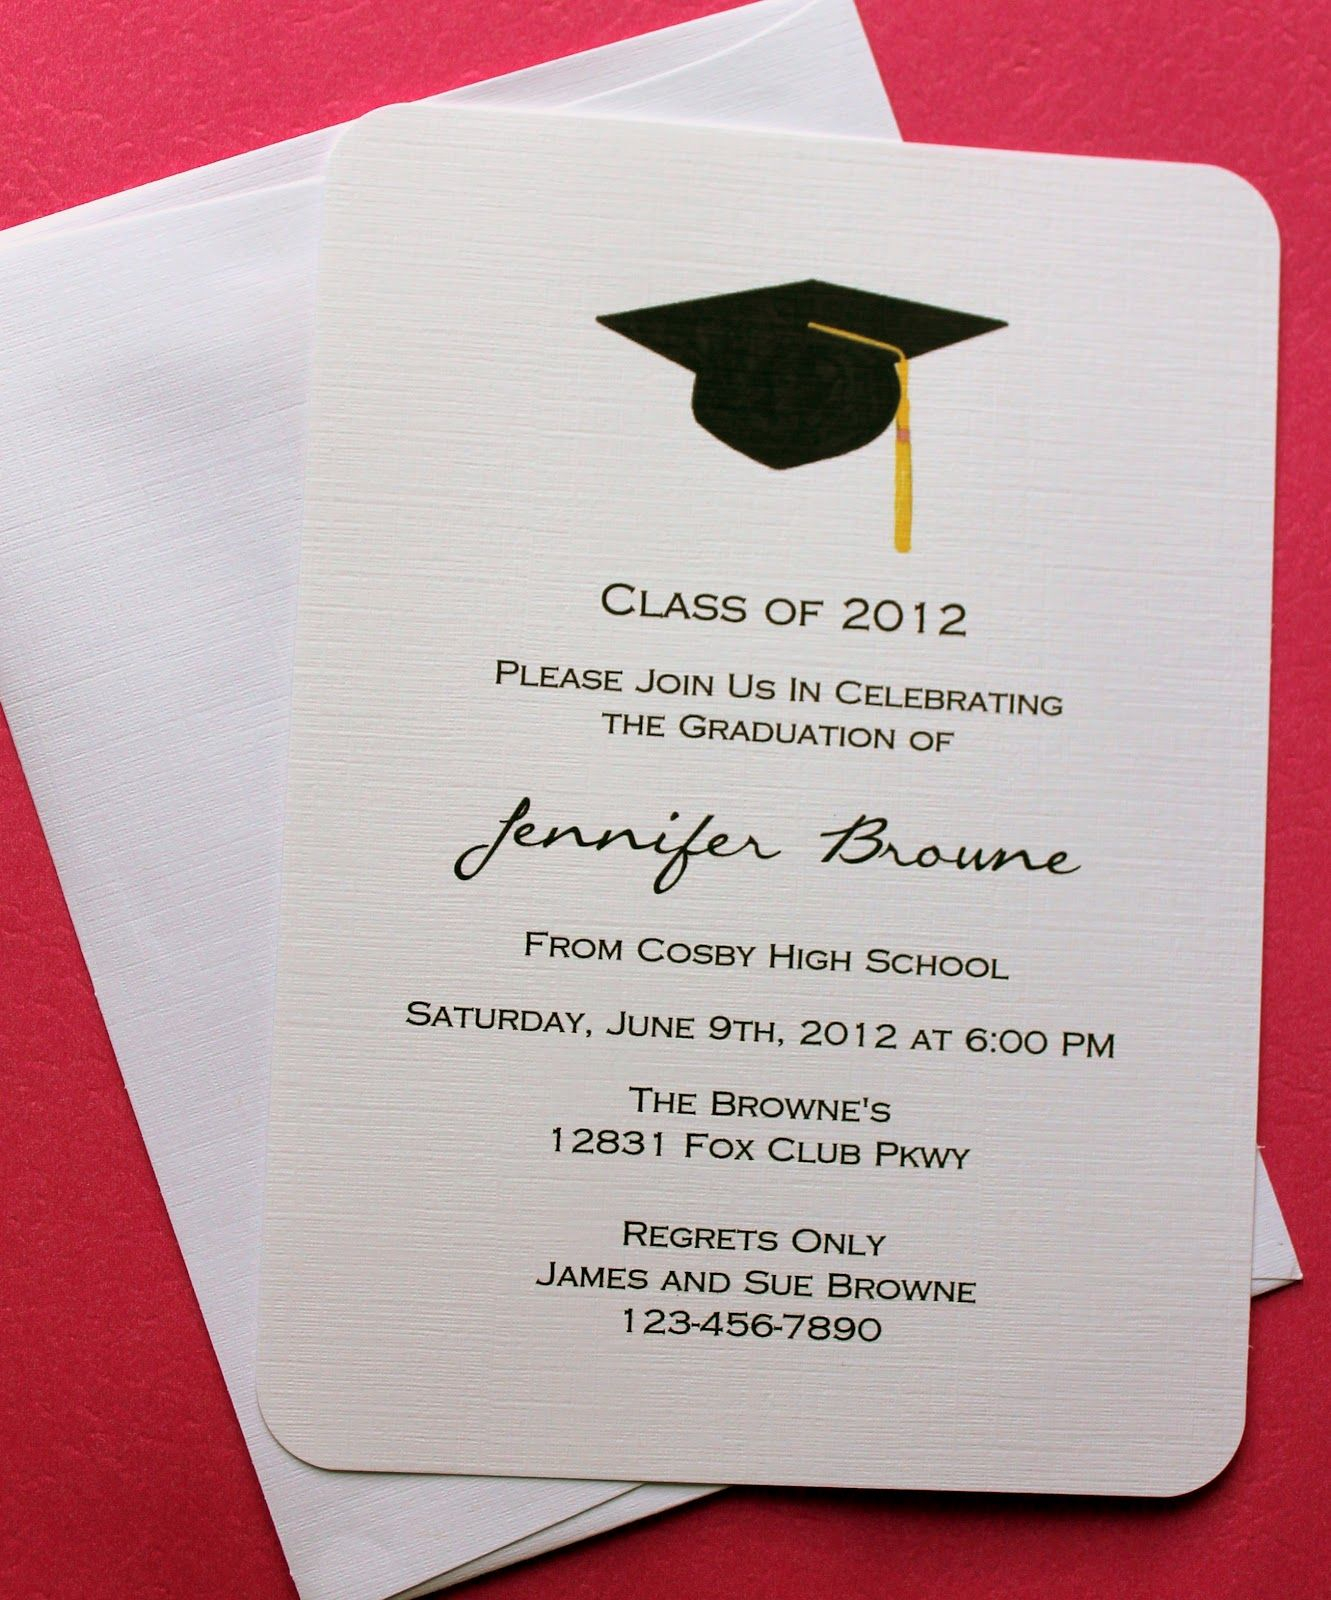 112-best-graduation-party-invitation-templates-images-on-pinterest